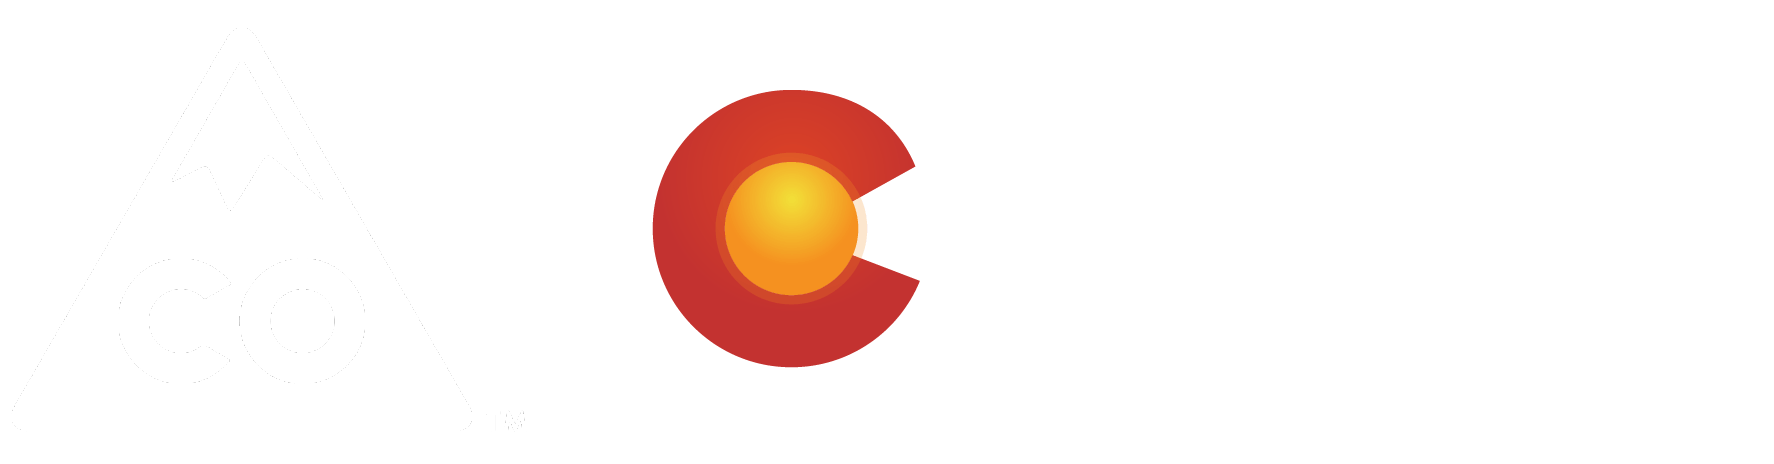 Co Logo - Colorado State Logo Licensing | OEDIT